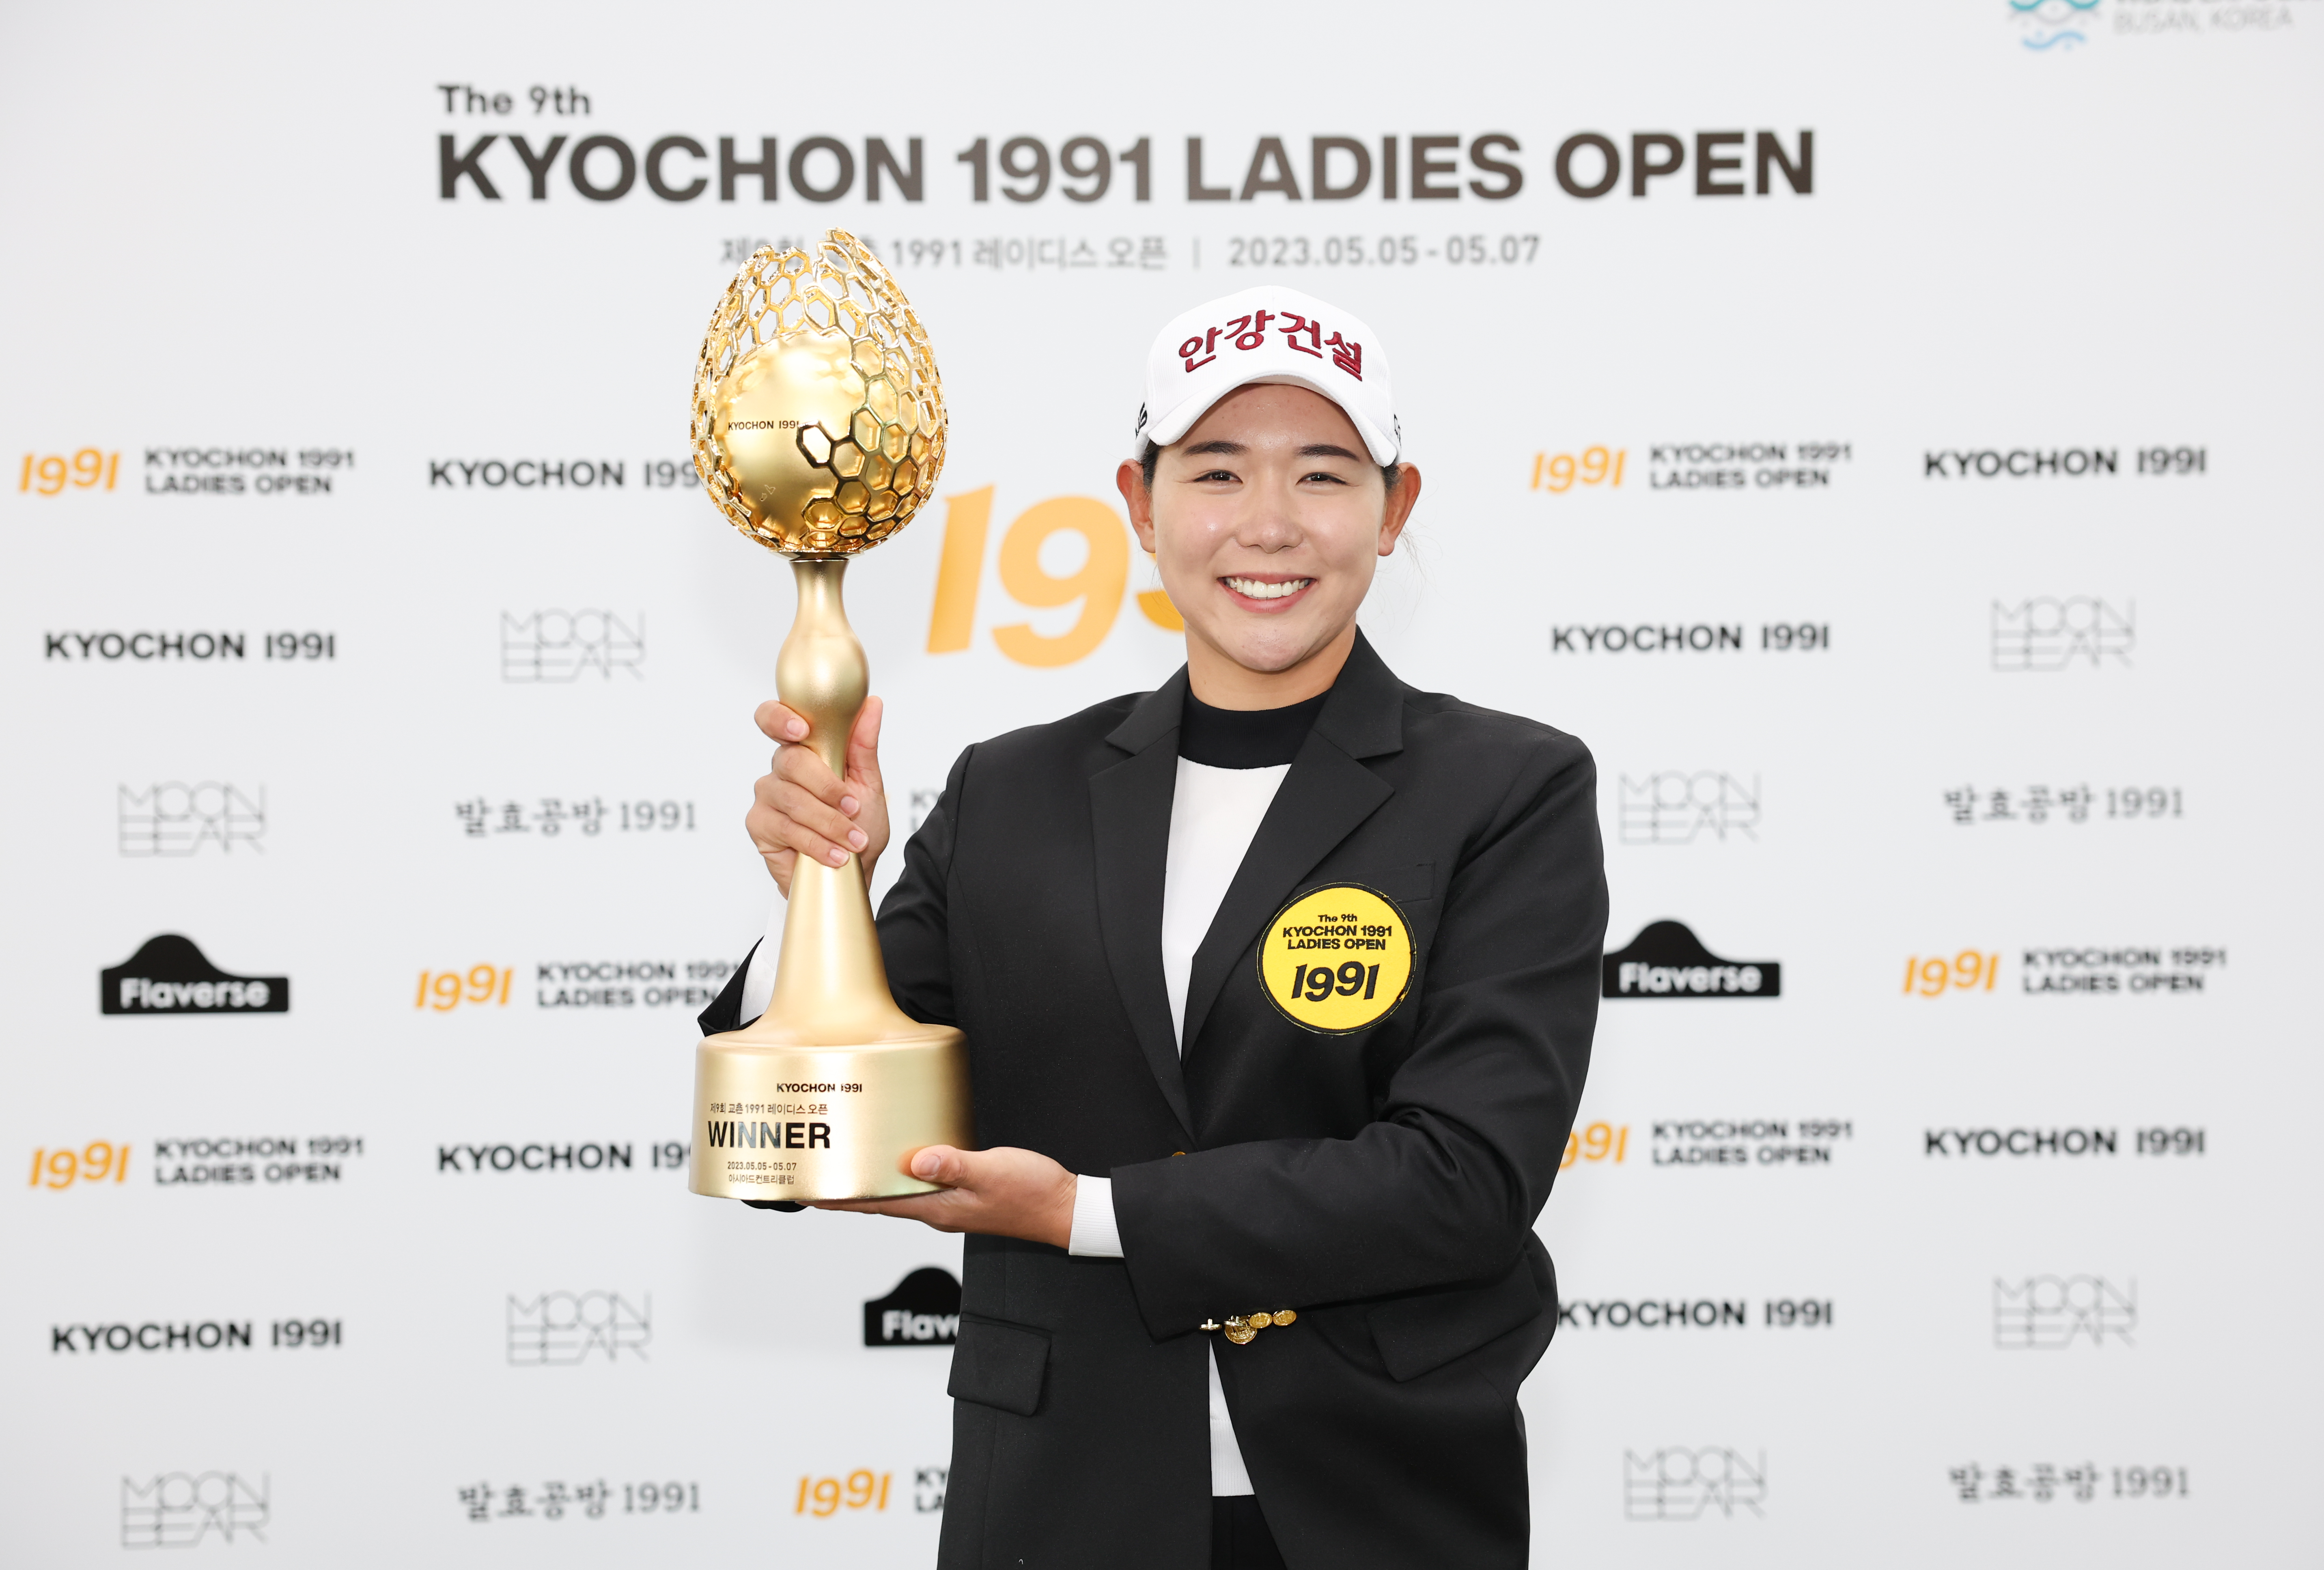 The winner of 9th Kyochon 1991 Ladies Open